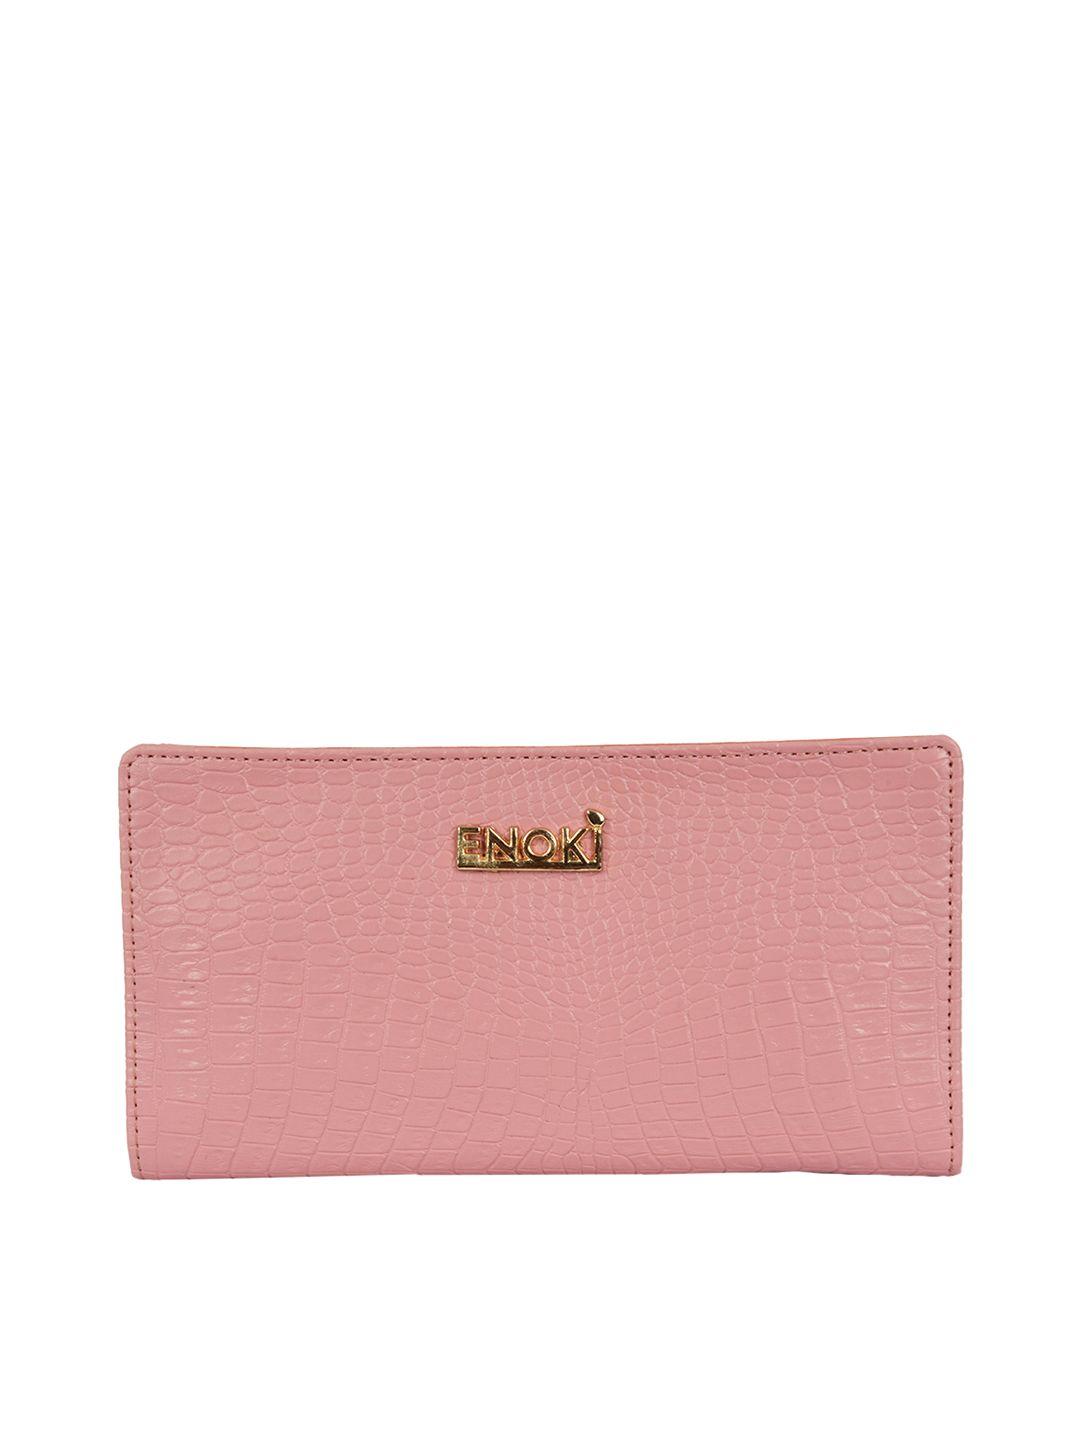 enoki-women-pink-&-gold-toned-two-fold-wallet